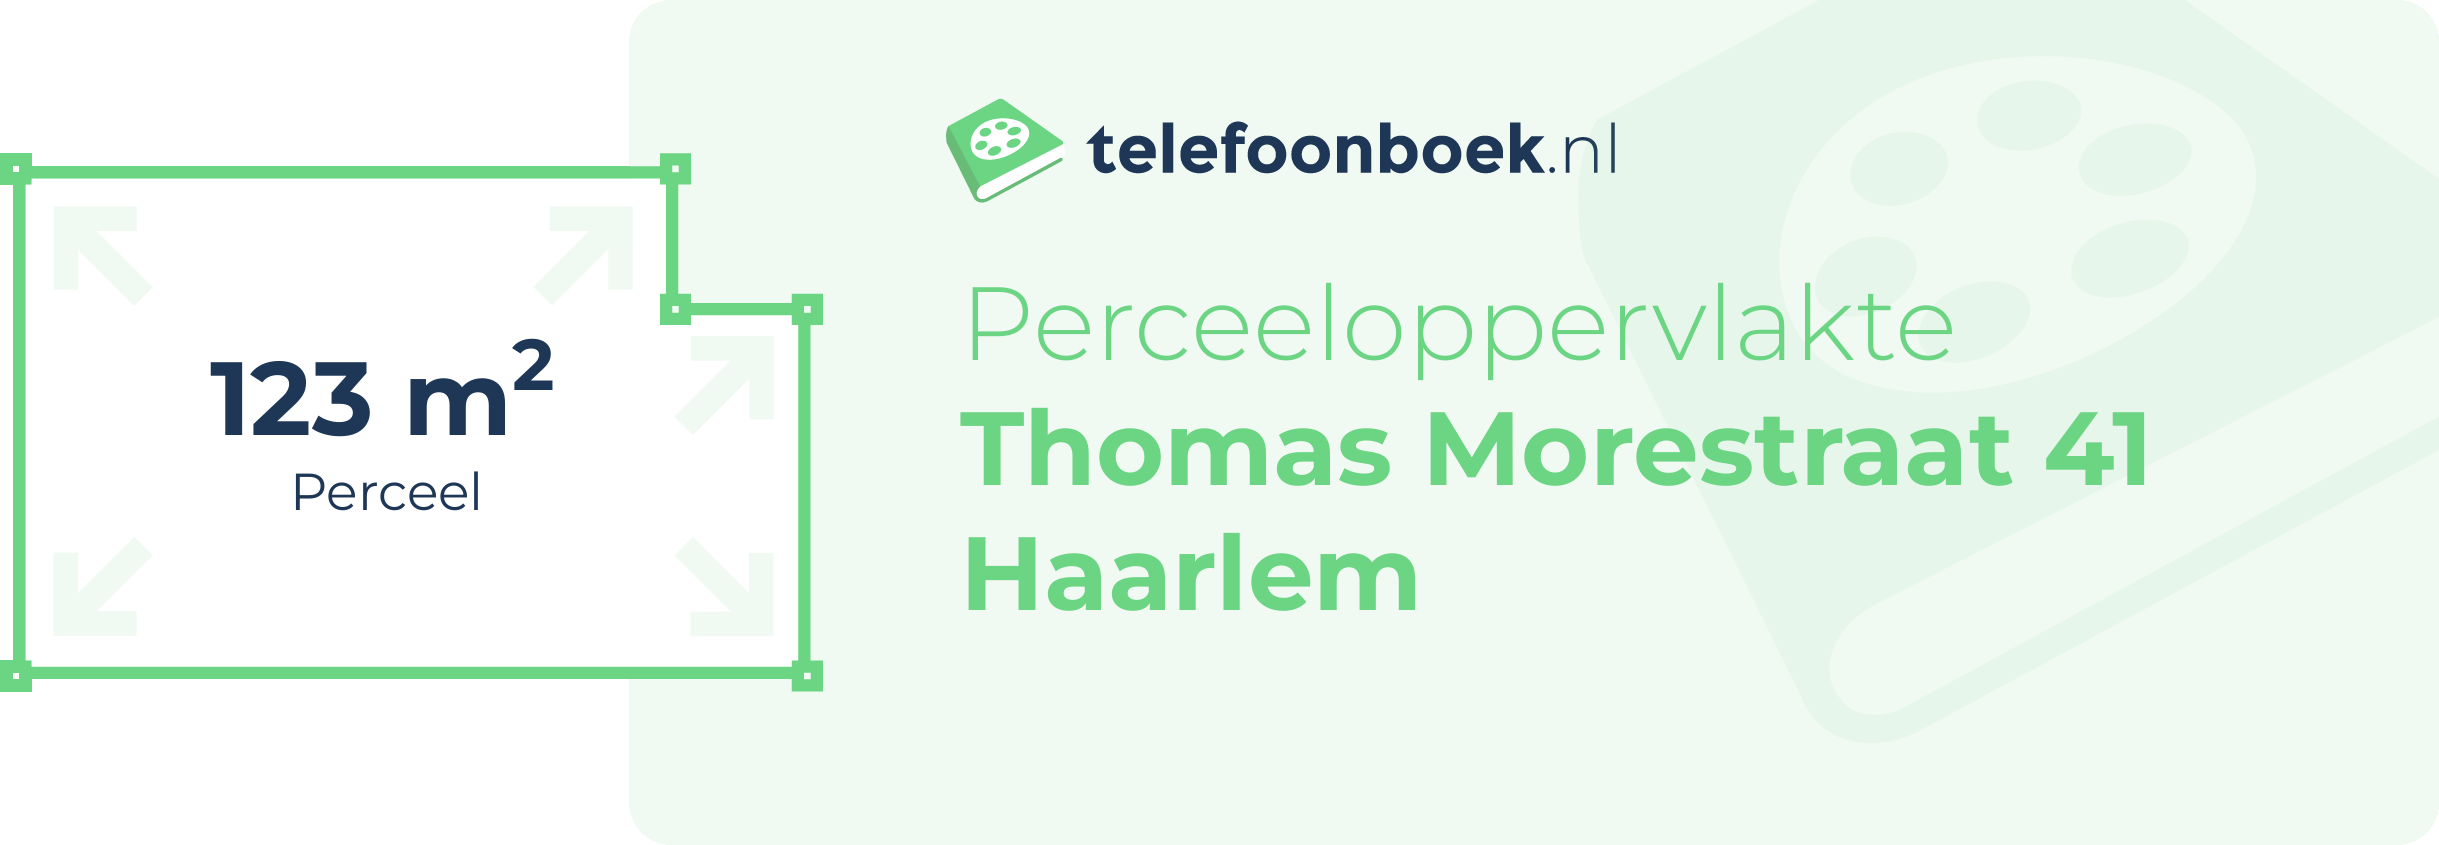 Perceeloppervlakte Thomas Morestraat 41 Haarlem